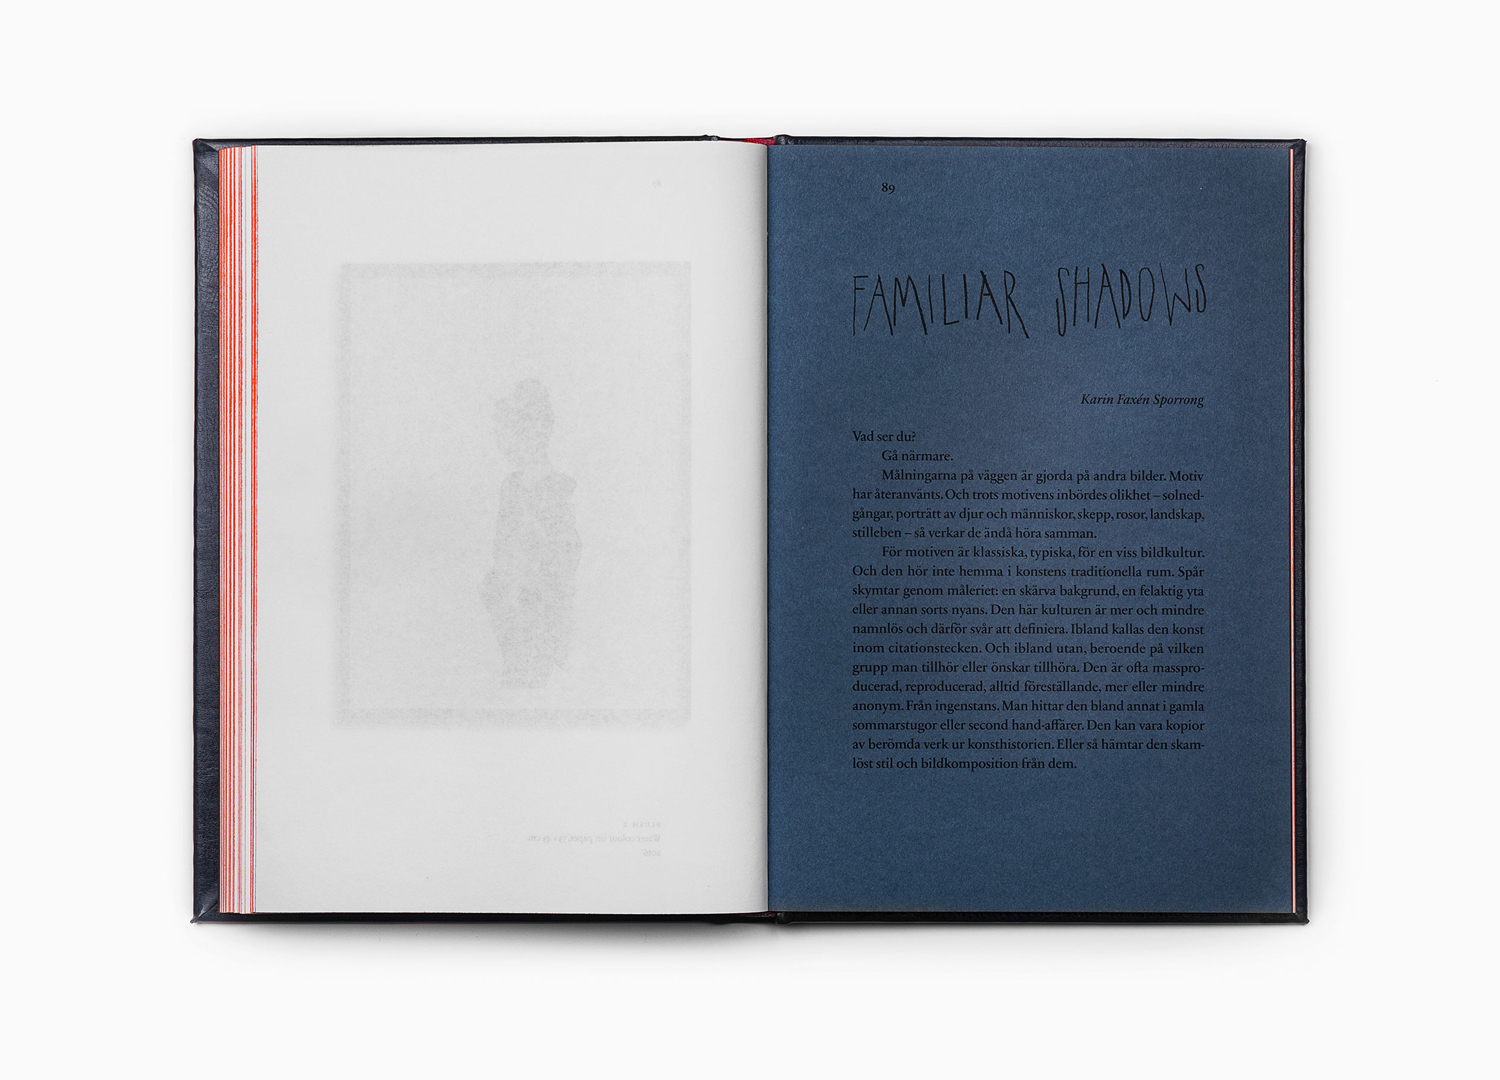 Swedish artist Anna Bjerger's book of works 2013—2017 designed by Scandinavian design studio Bedow